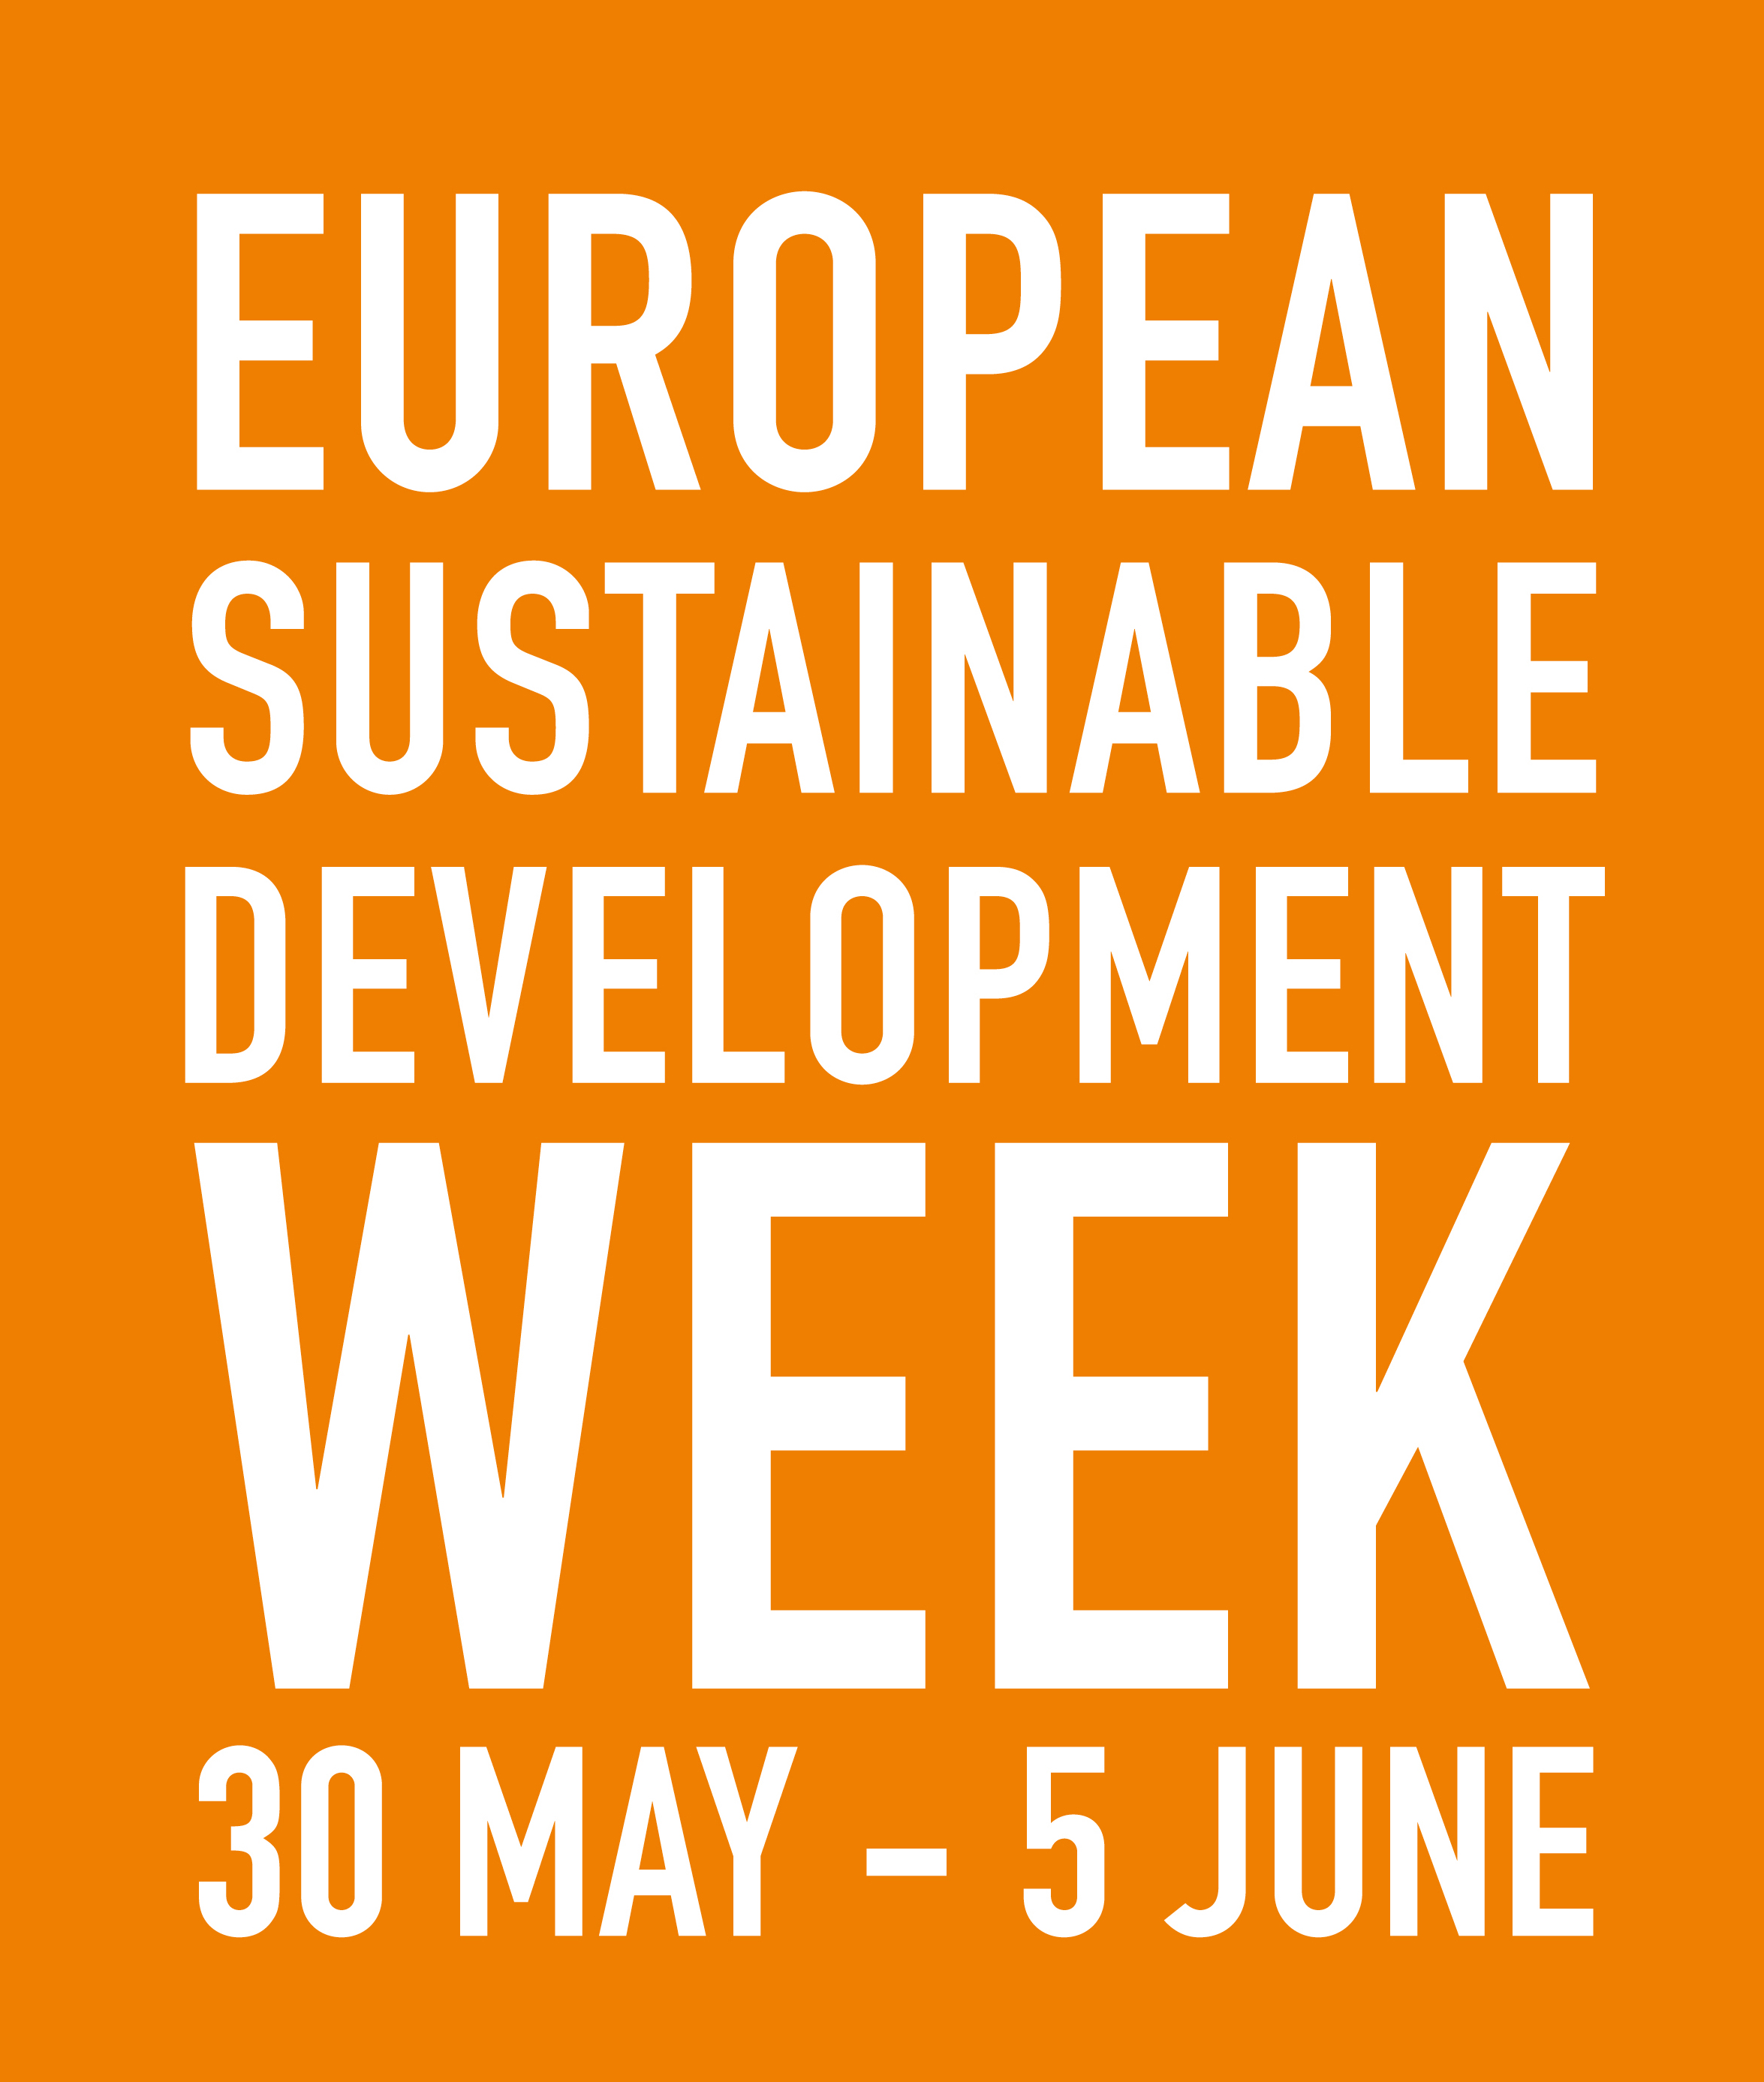 European Sustainable Development Week 2017